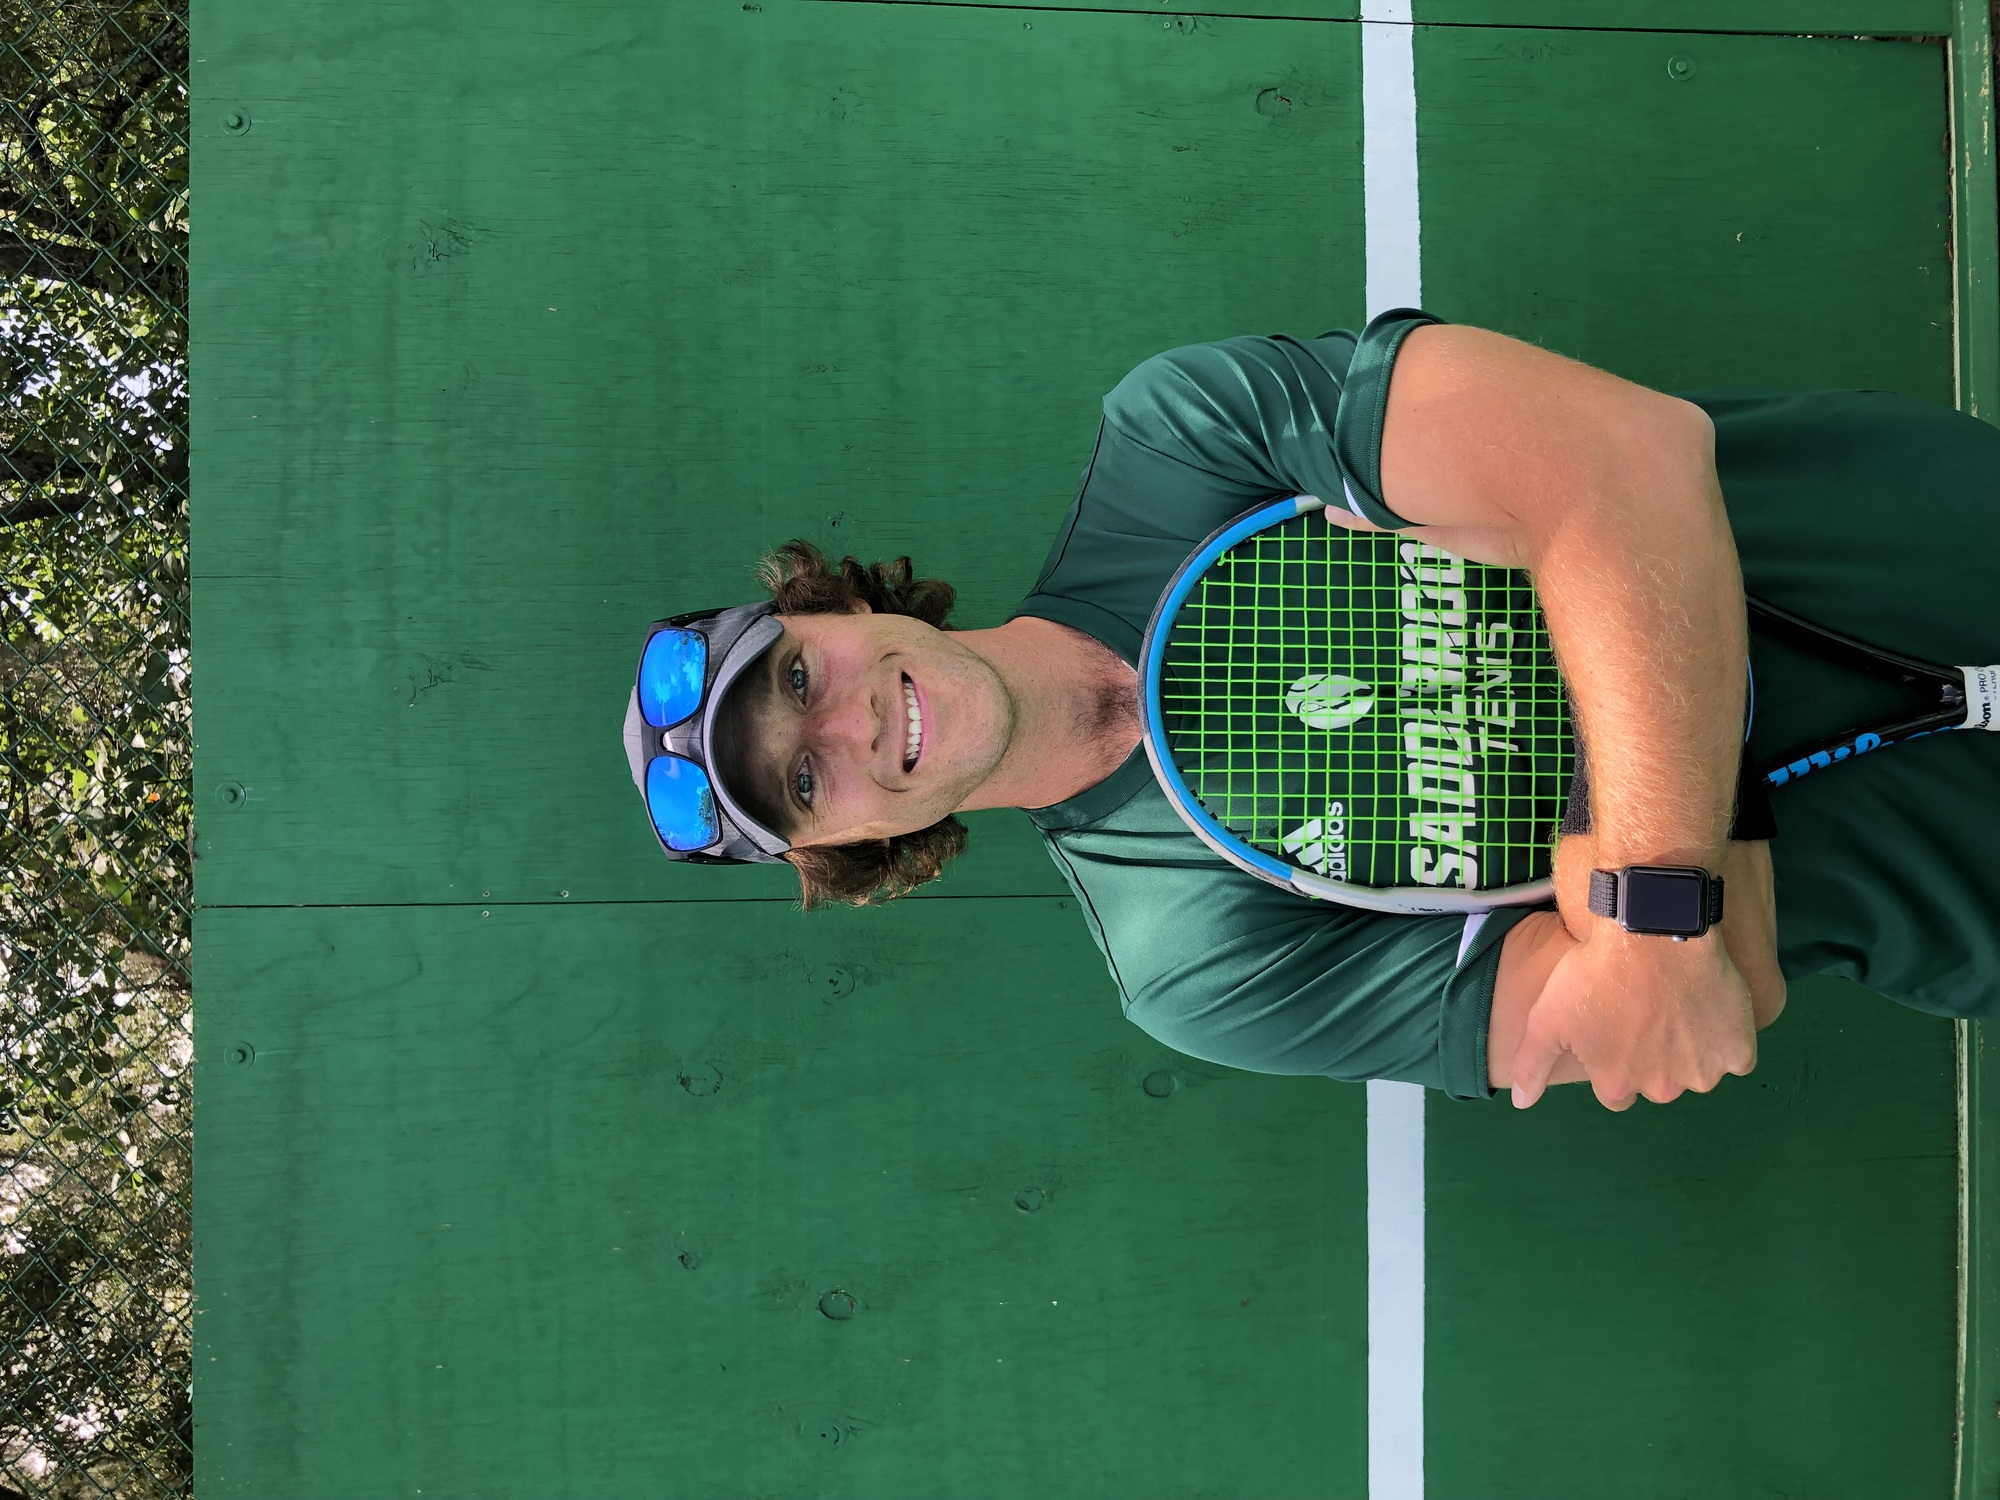 Tyler B. teaches tennis lessons in Universal City, TX